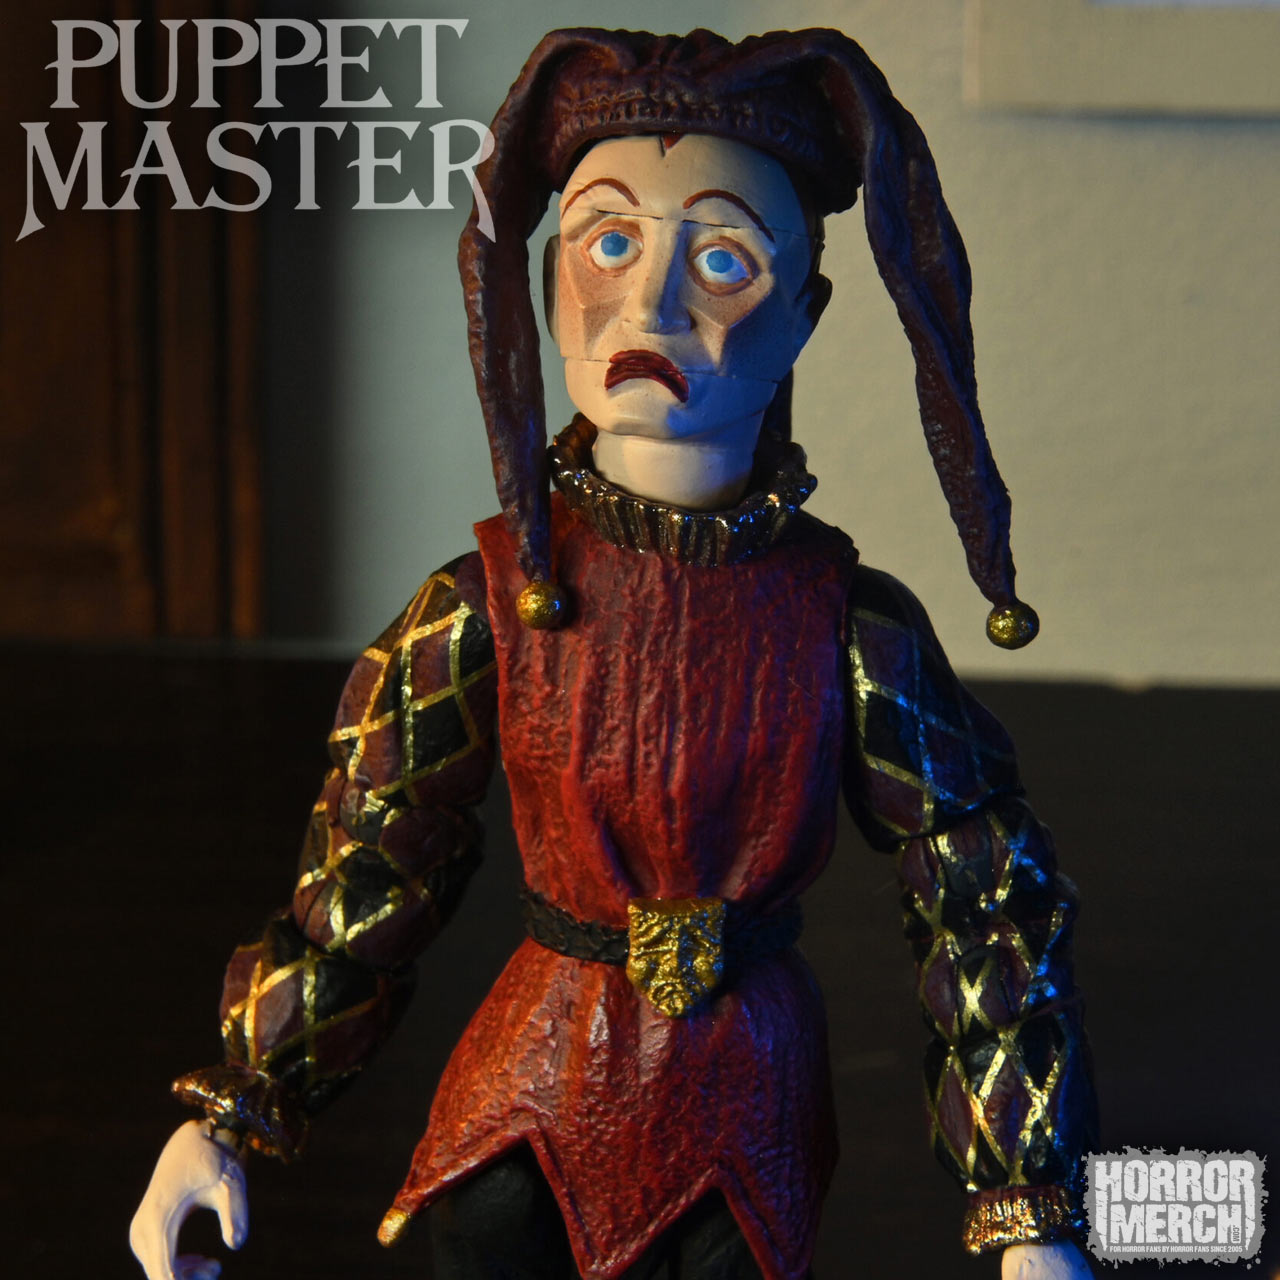 Puppet Master Original Series: JESTER